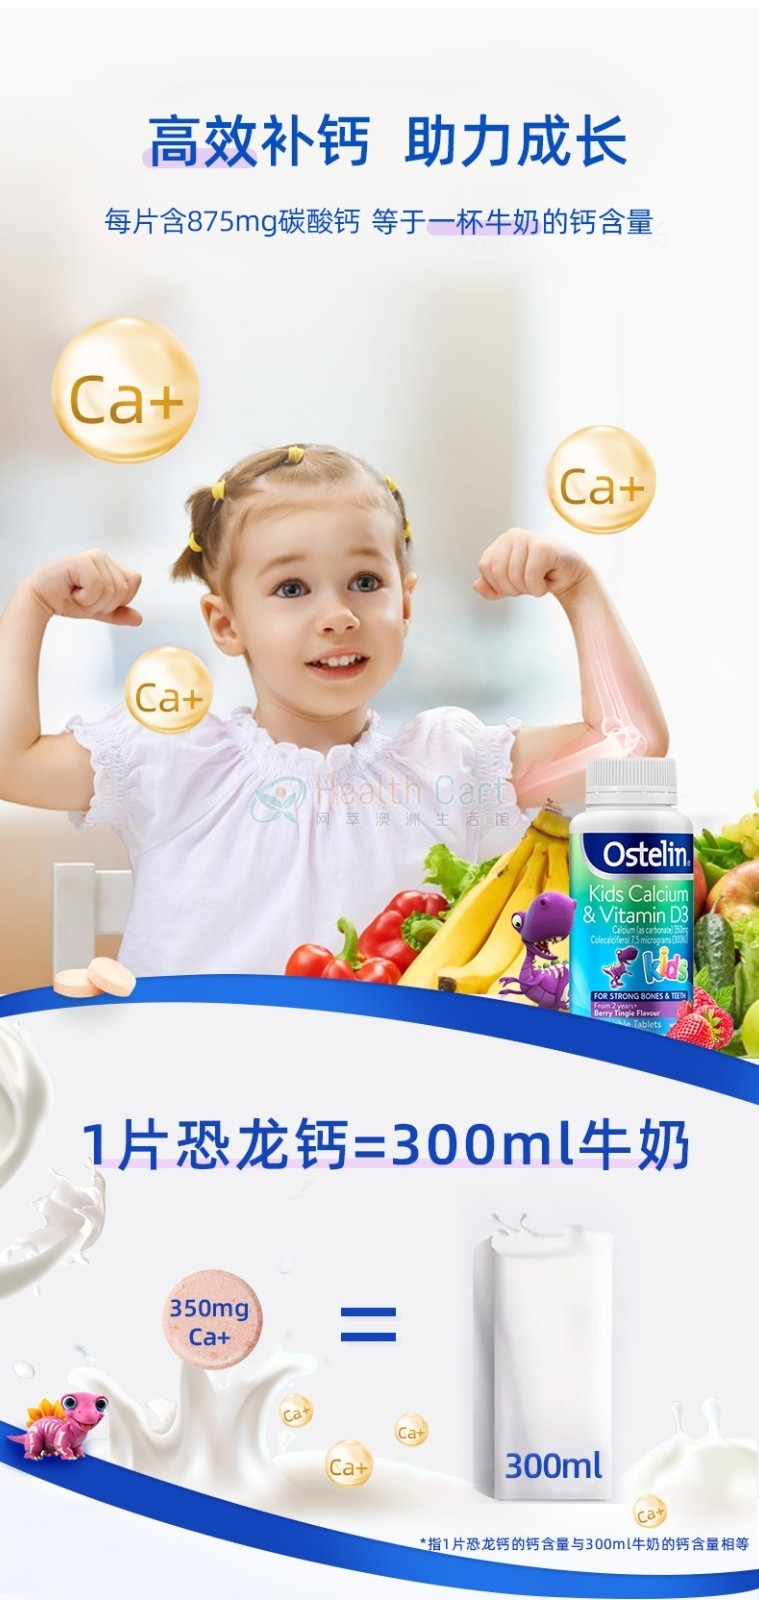 Ostelin Kids Calcium & Vitamin D3 90 Chewable Tablets - @ostelin kids calcium  vitamin d3 90 chewable tablets - 11 - Health Cart